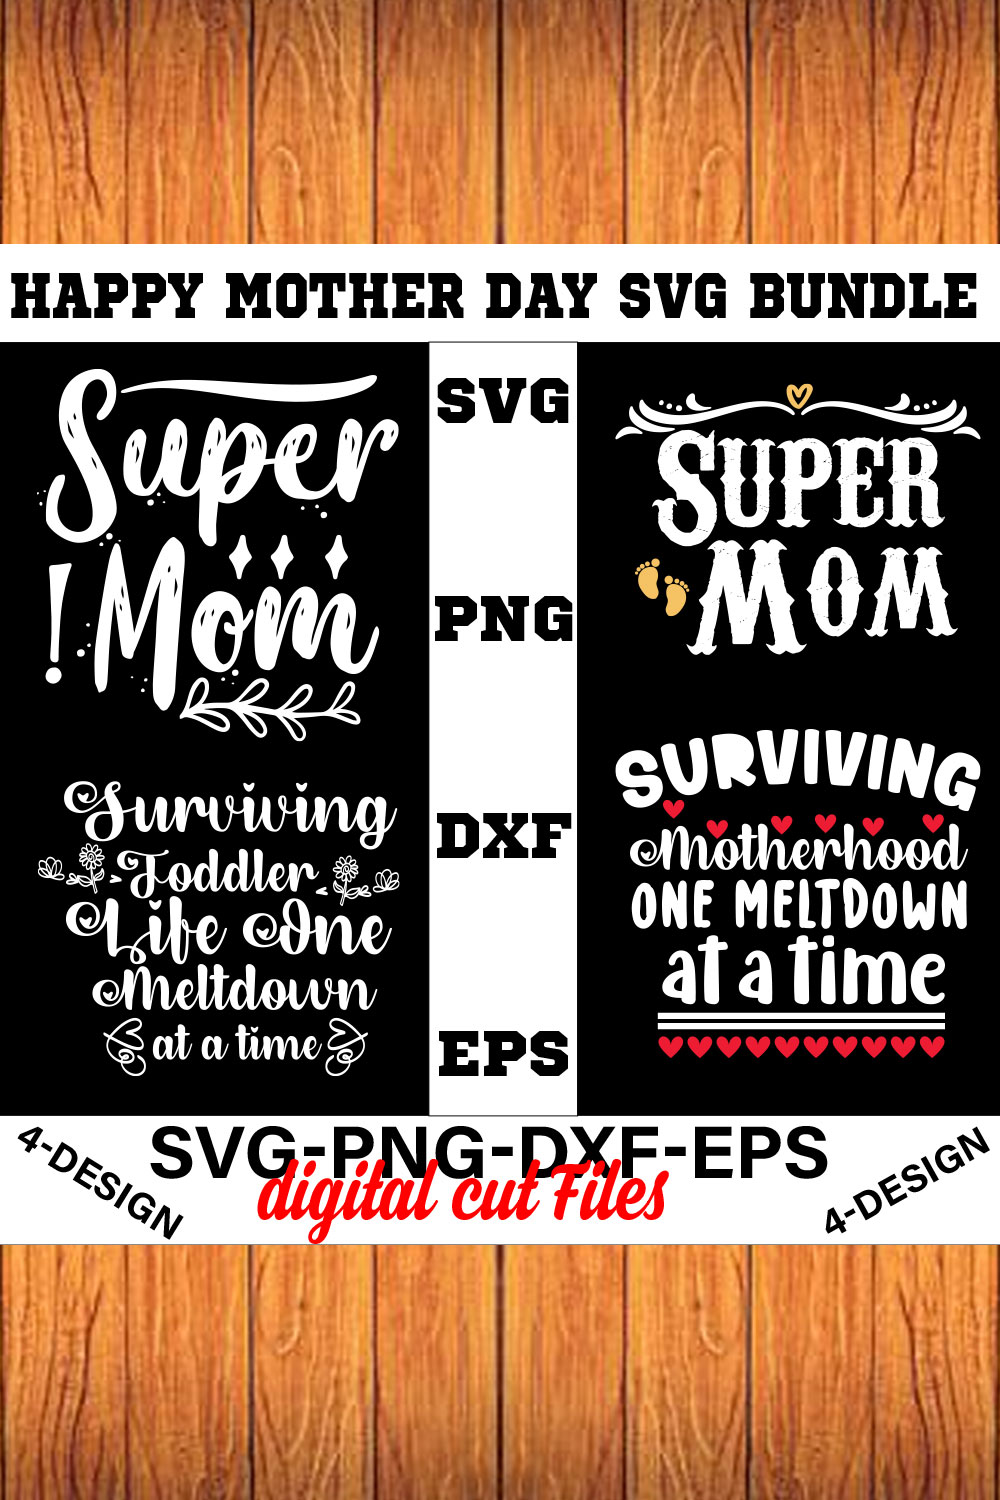 Happy mother day svg Bundle Vol-14 pinterest preview image.